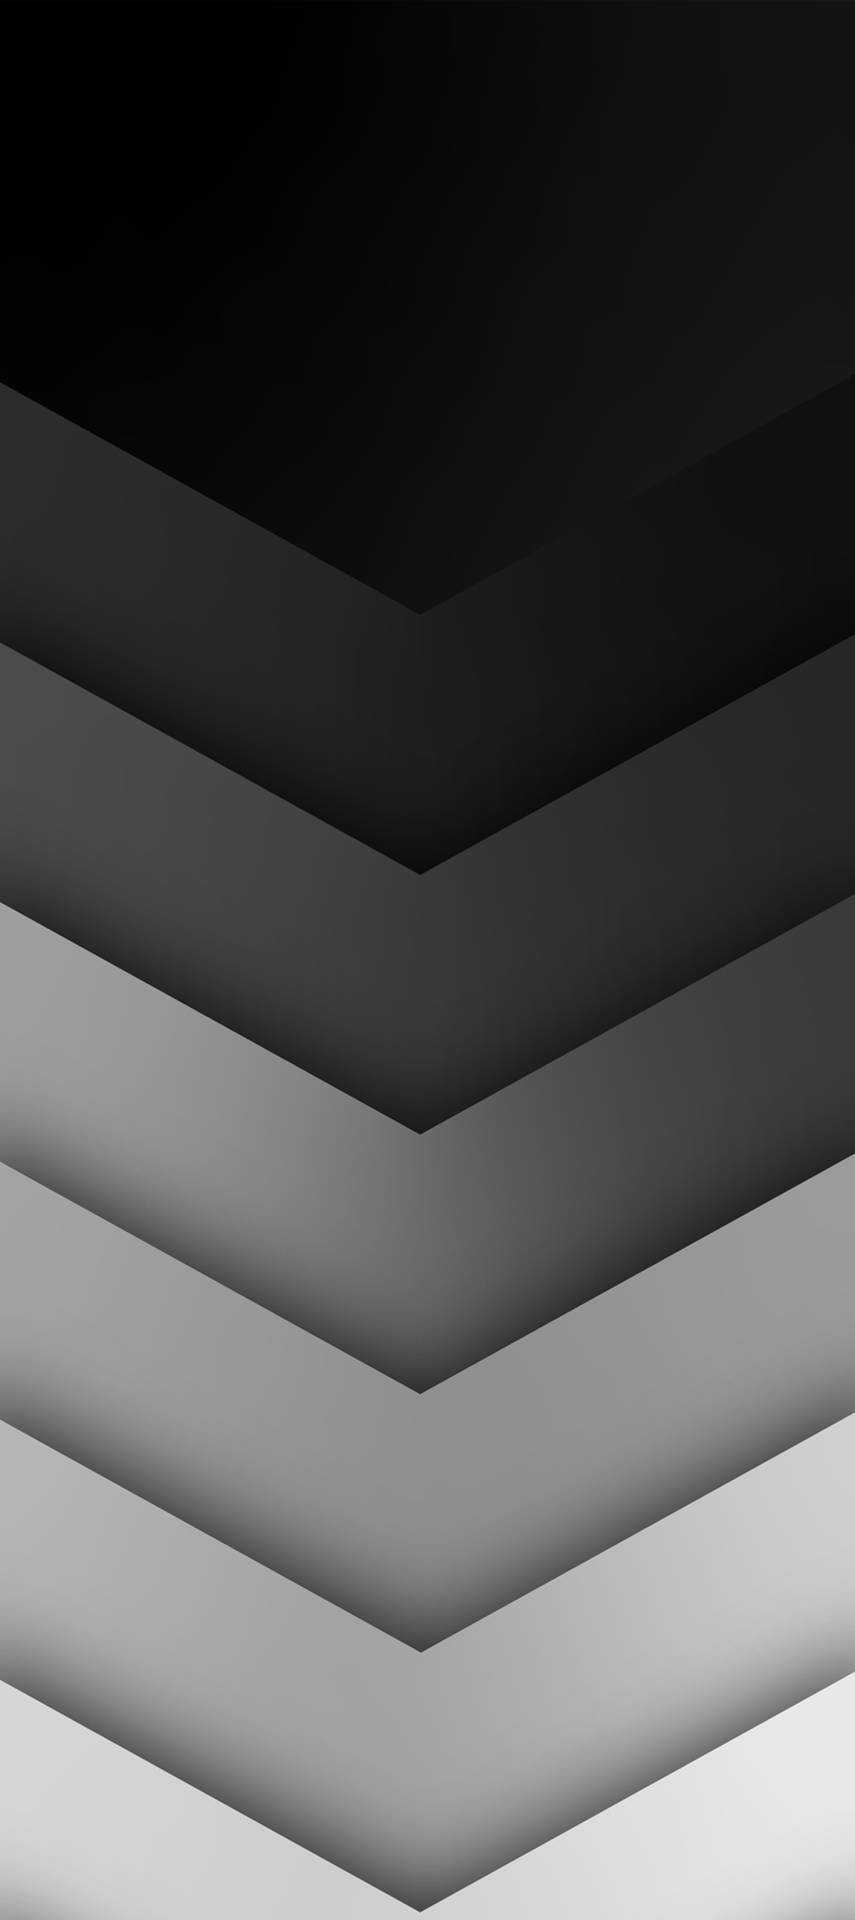 Chevron Pattern Black And Grey Iphone